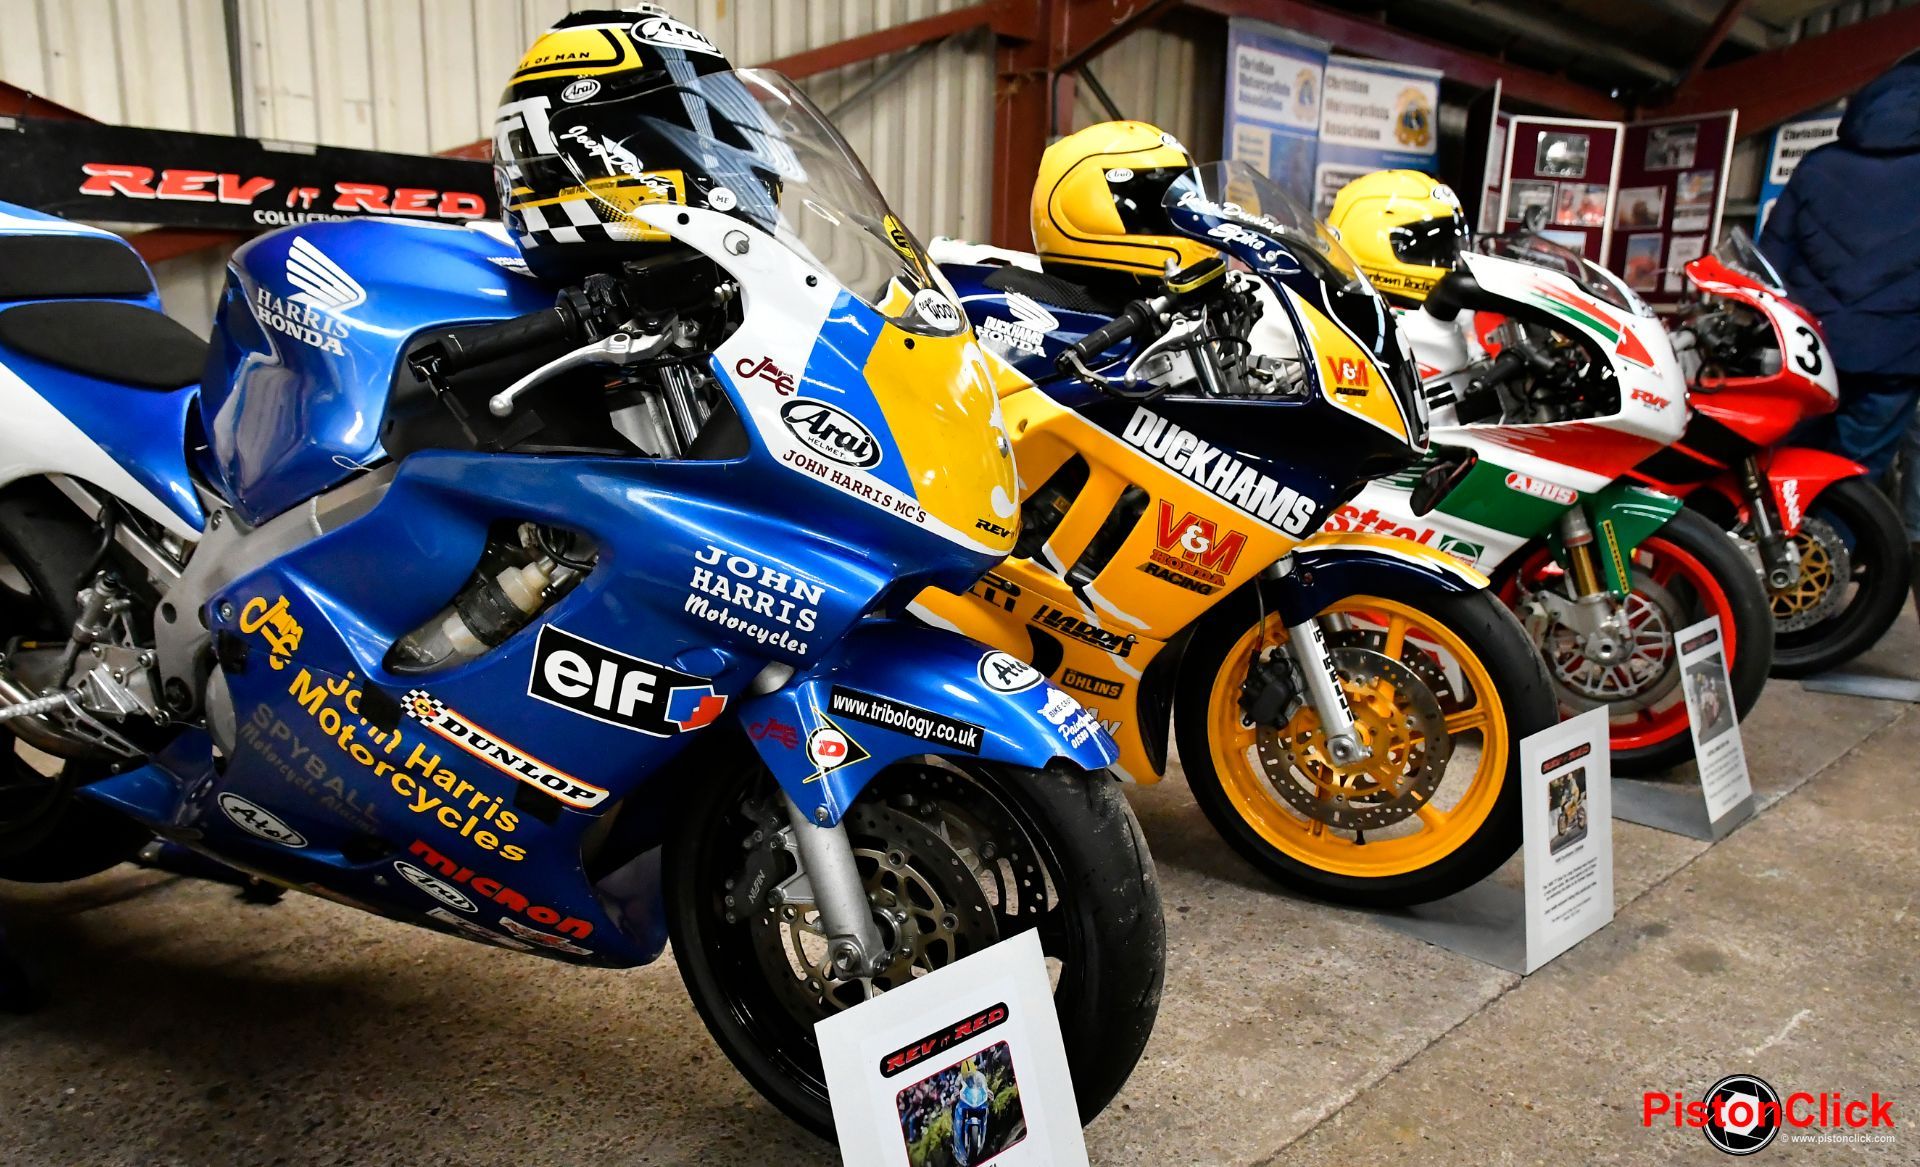 Joey Dunlop motorbikes